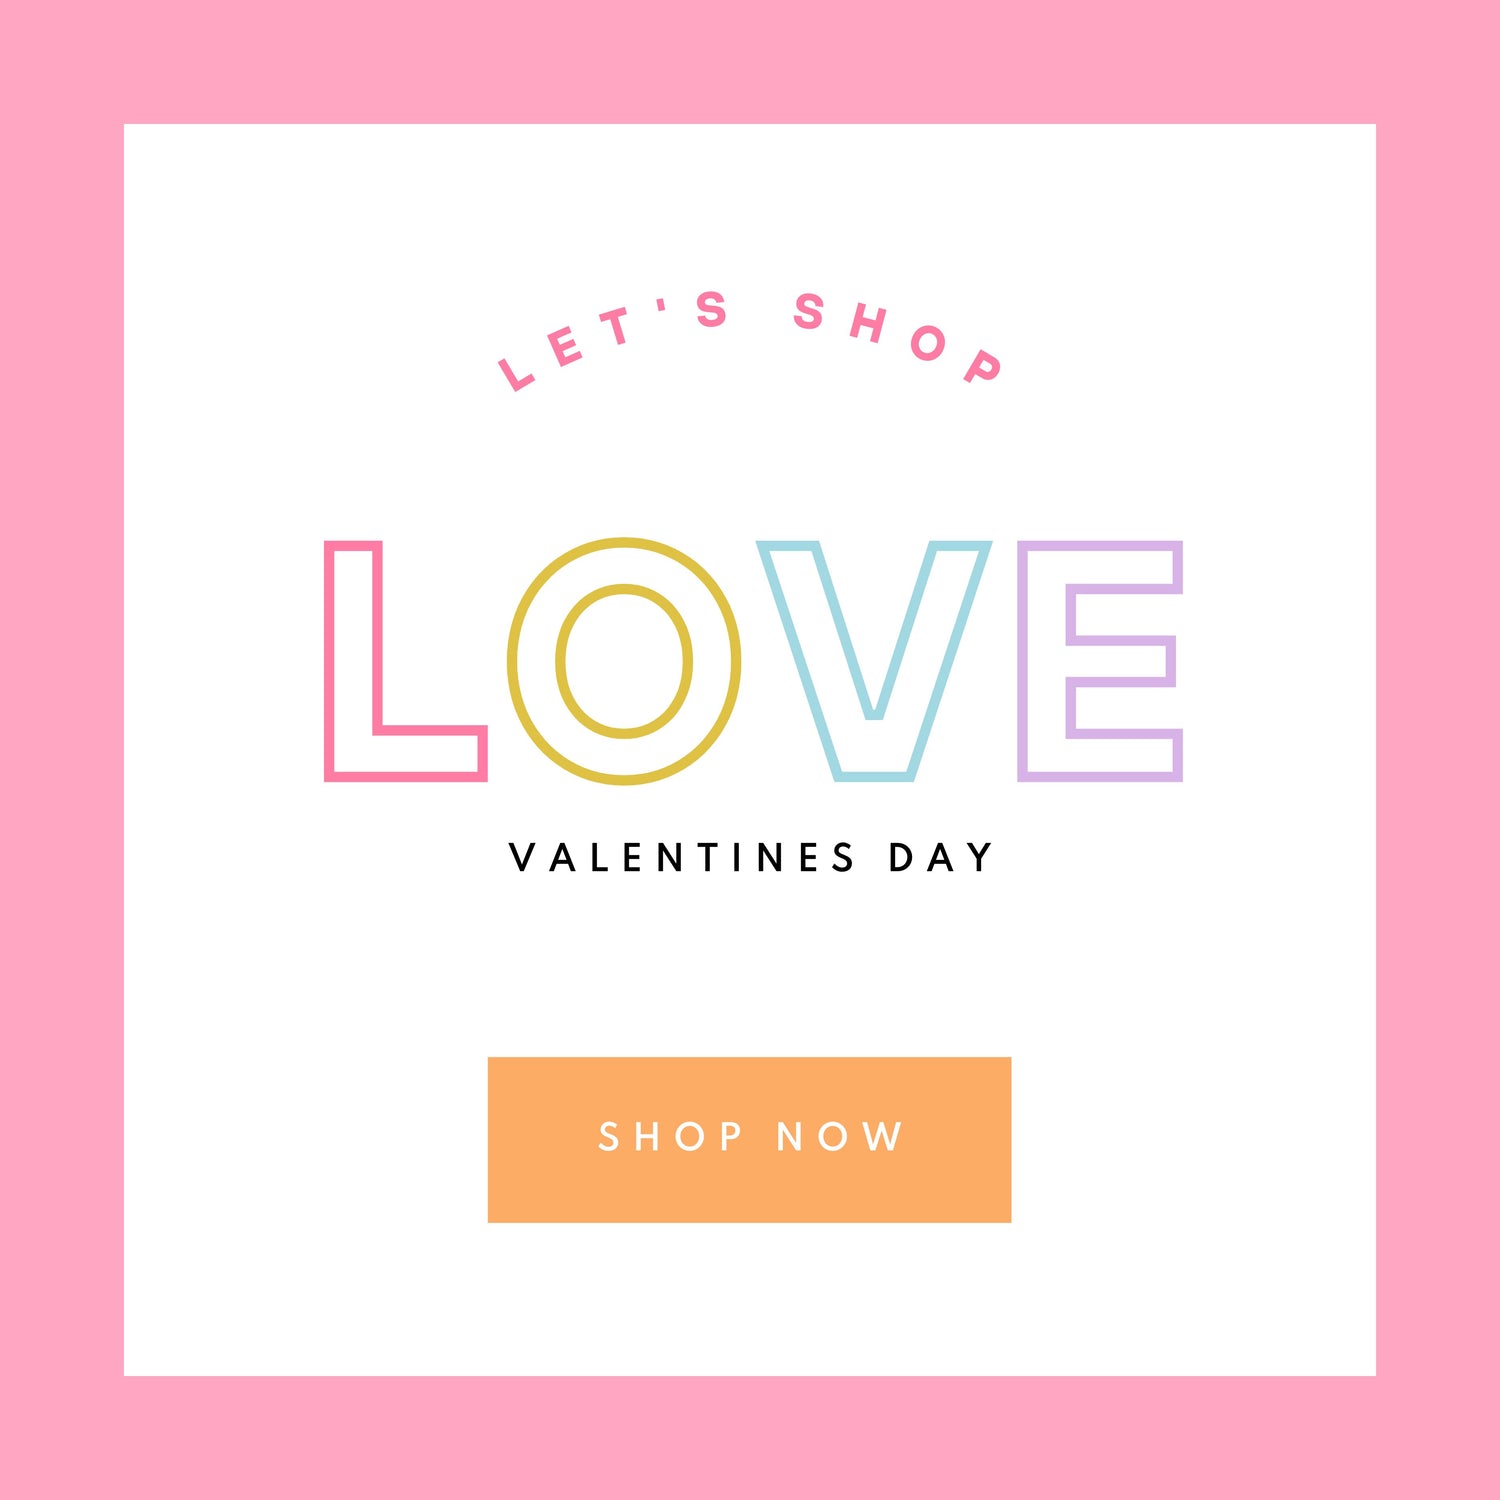 Valentines Day/Love